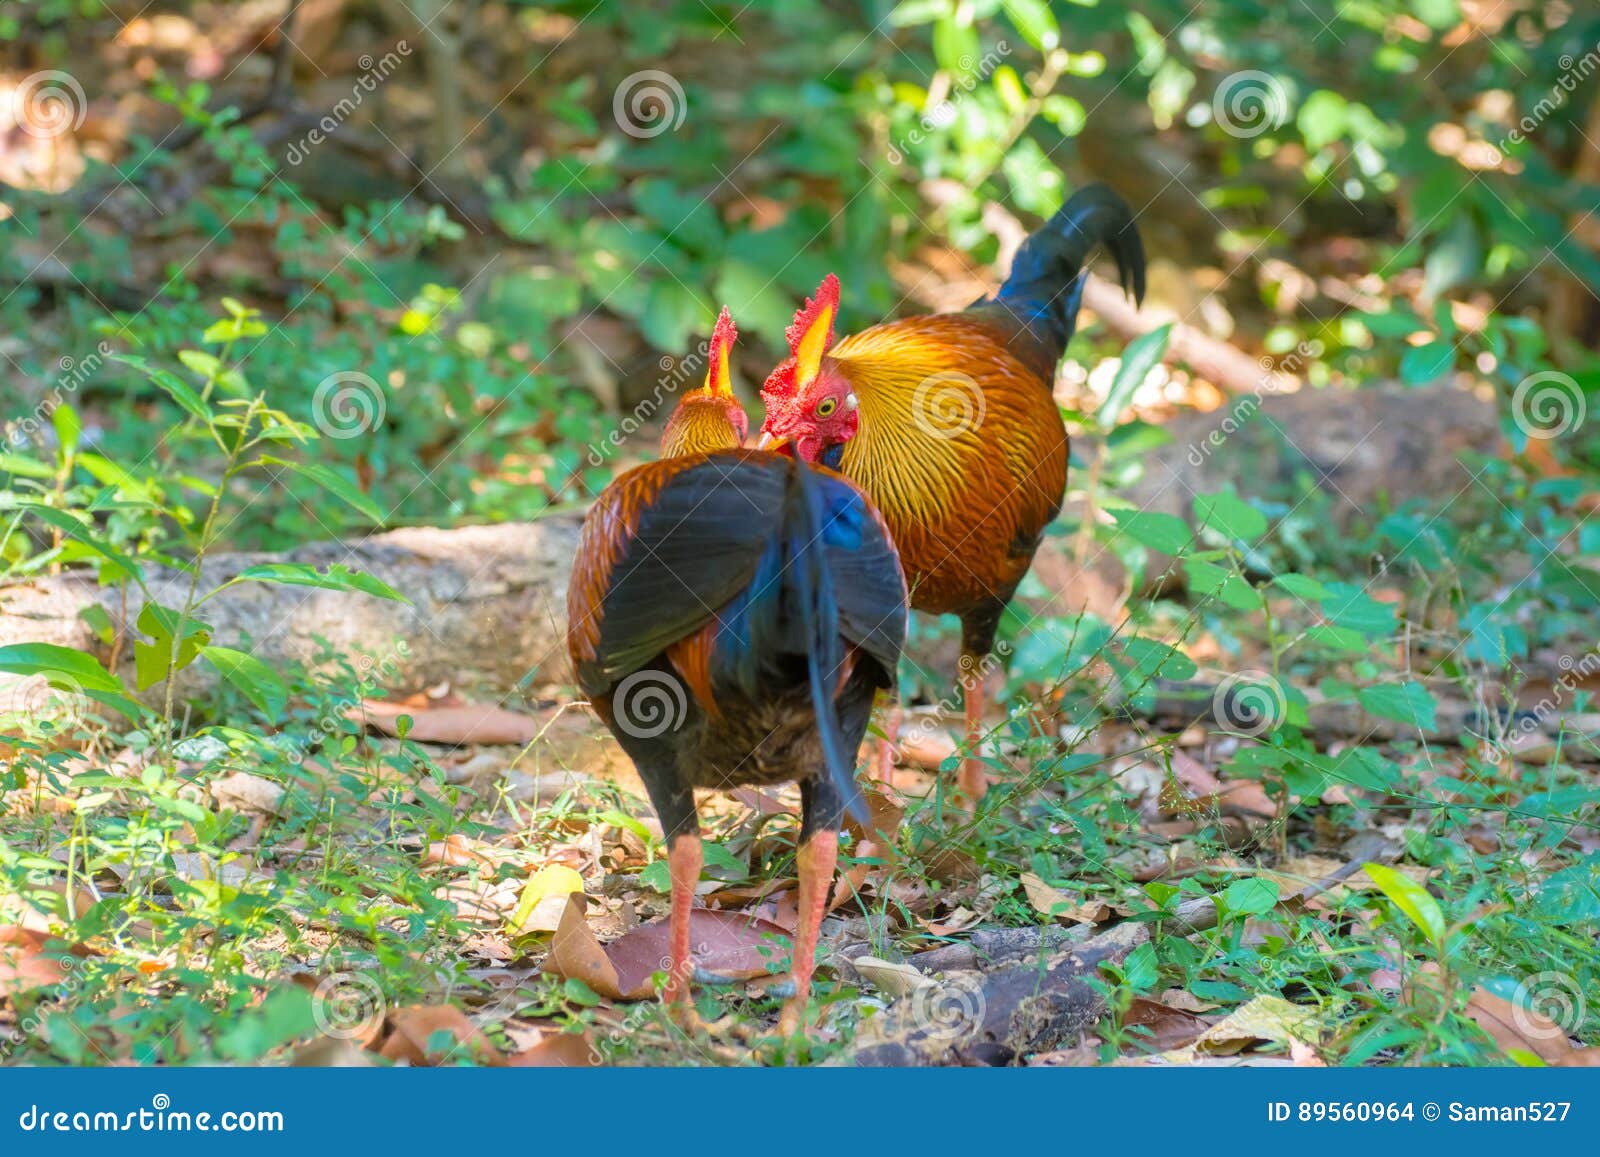 sri lankan jungle fowl